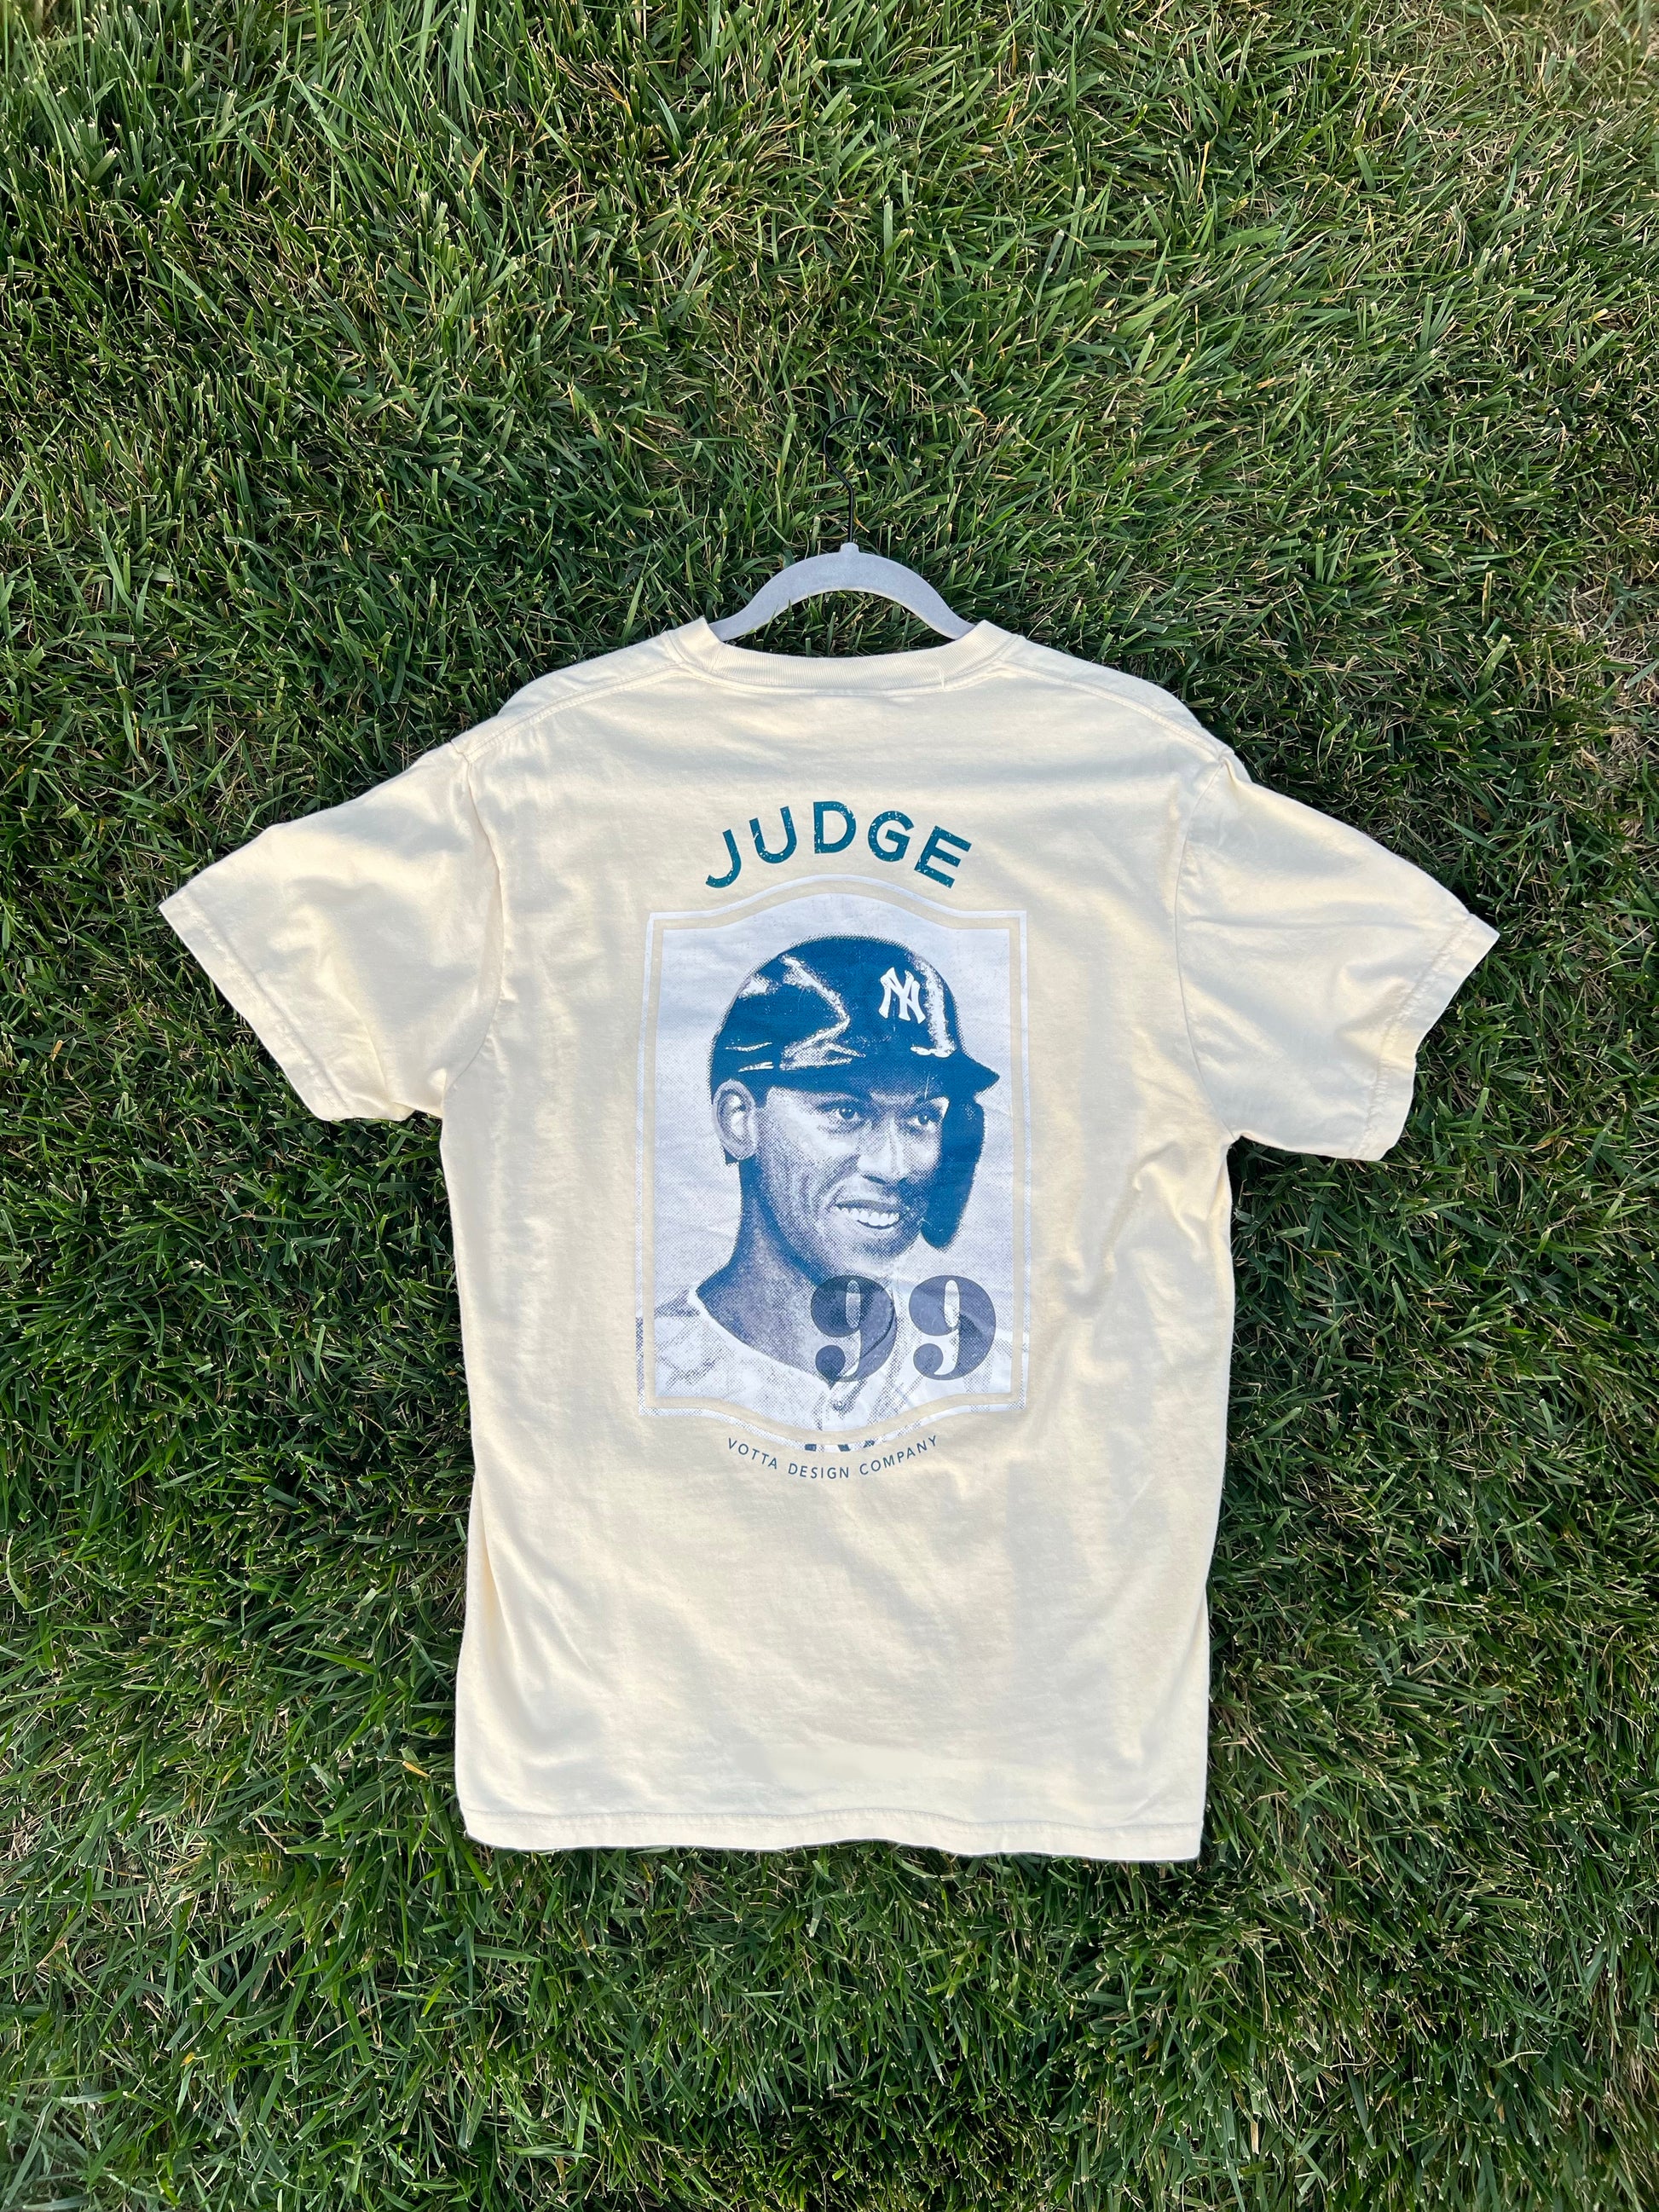 Aaron Judge 61 Home Runs Baseball Shirt - Bugaloo Boutique